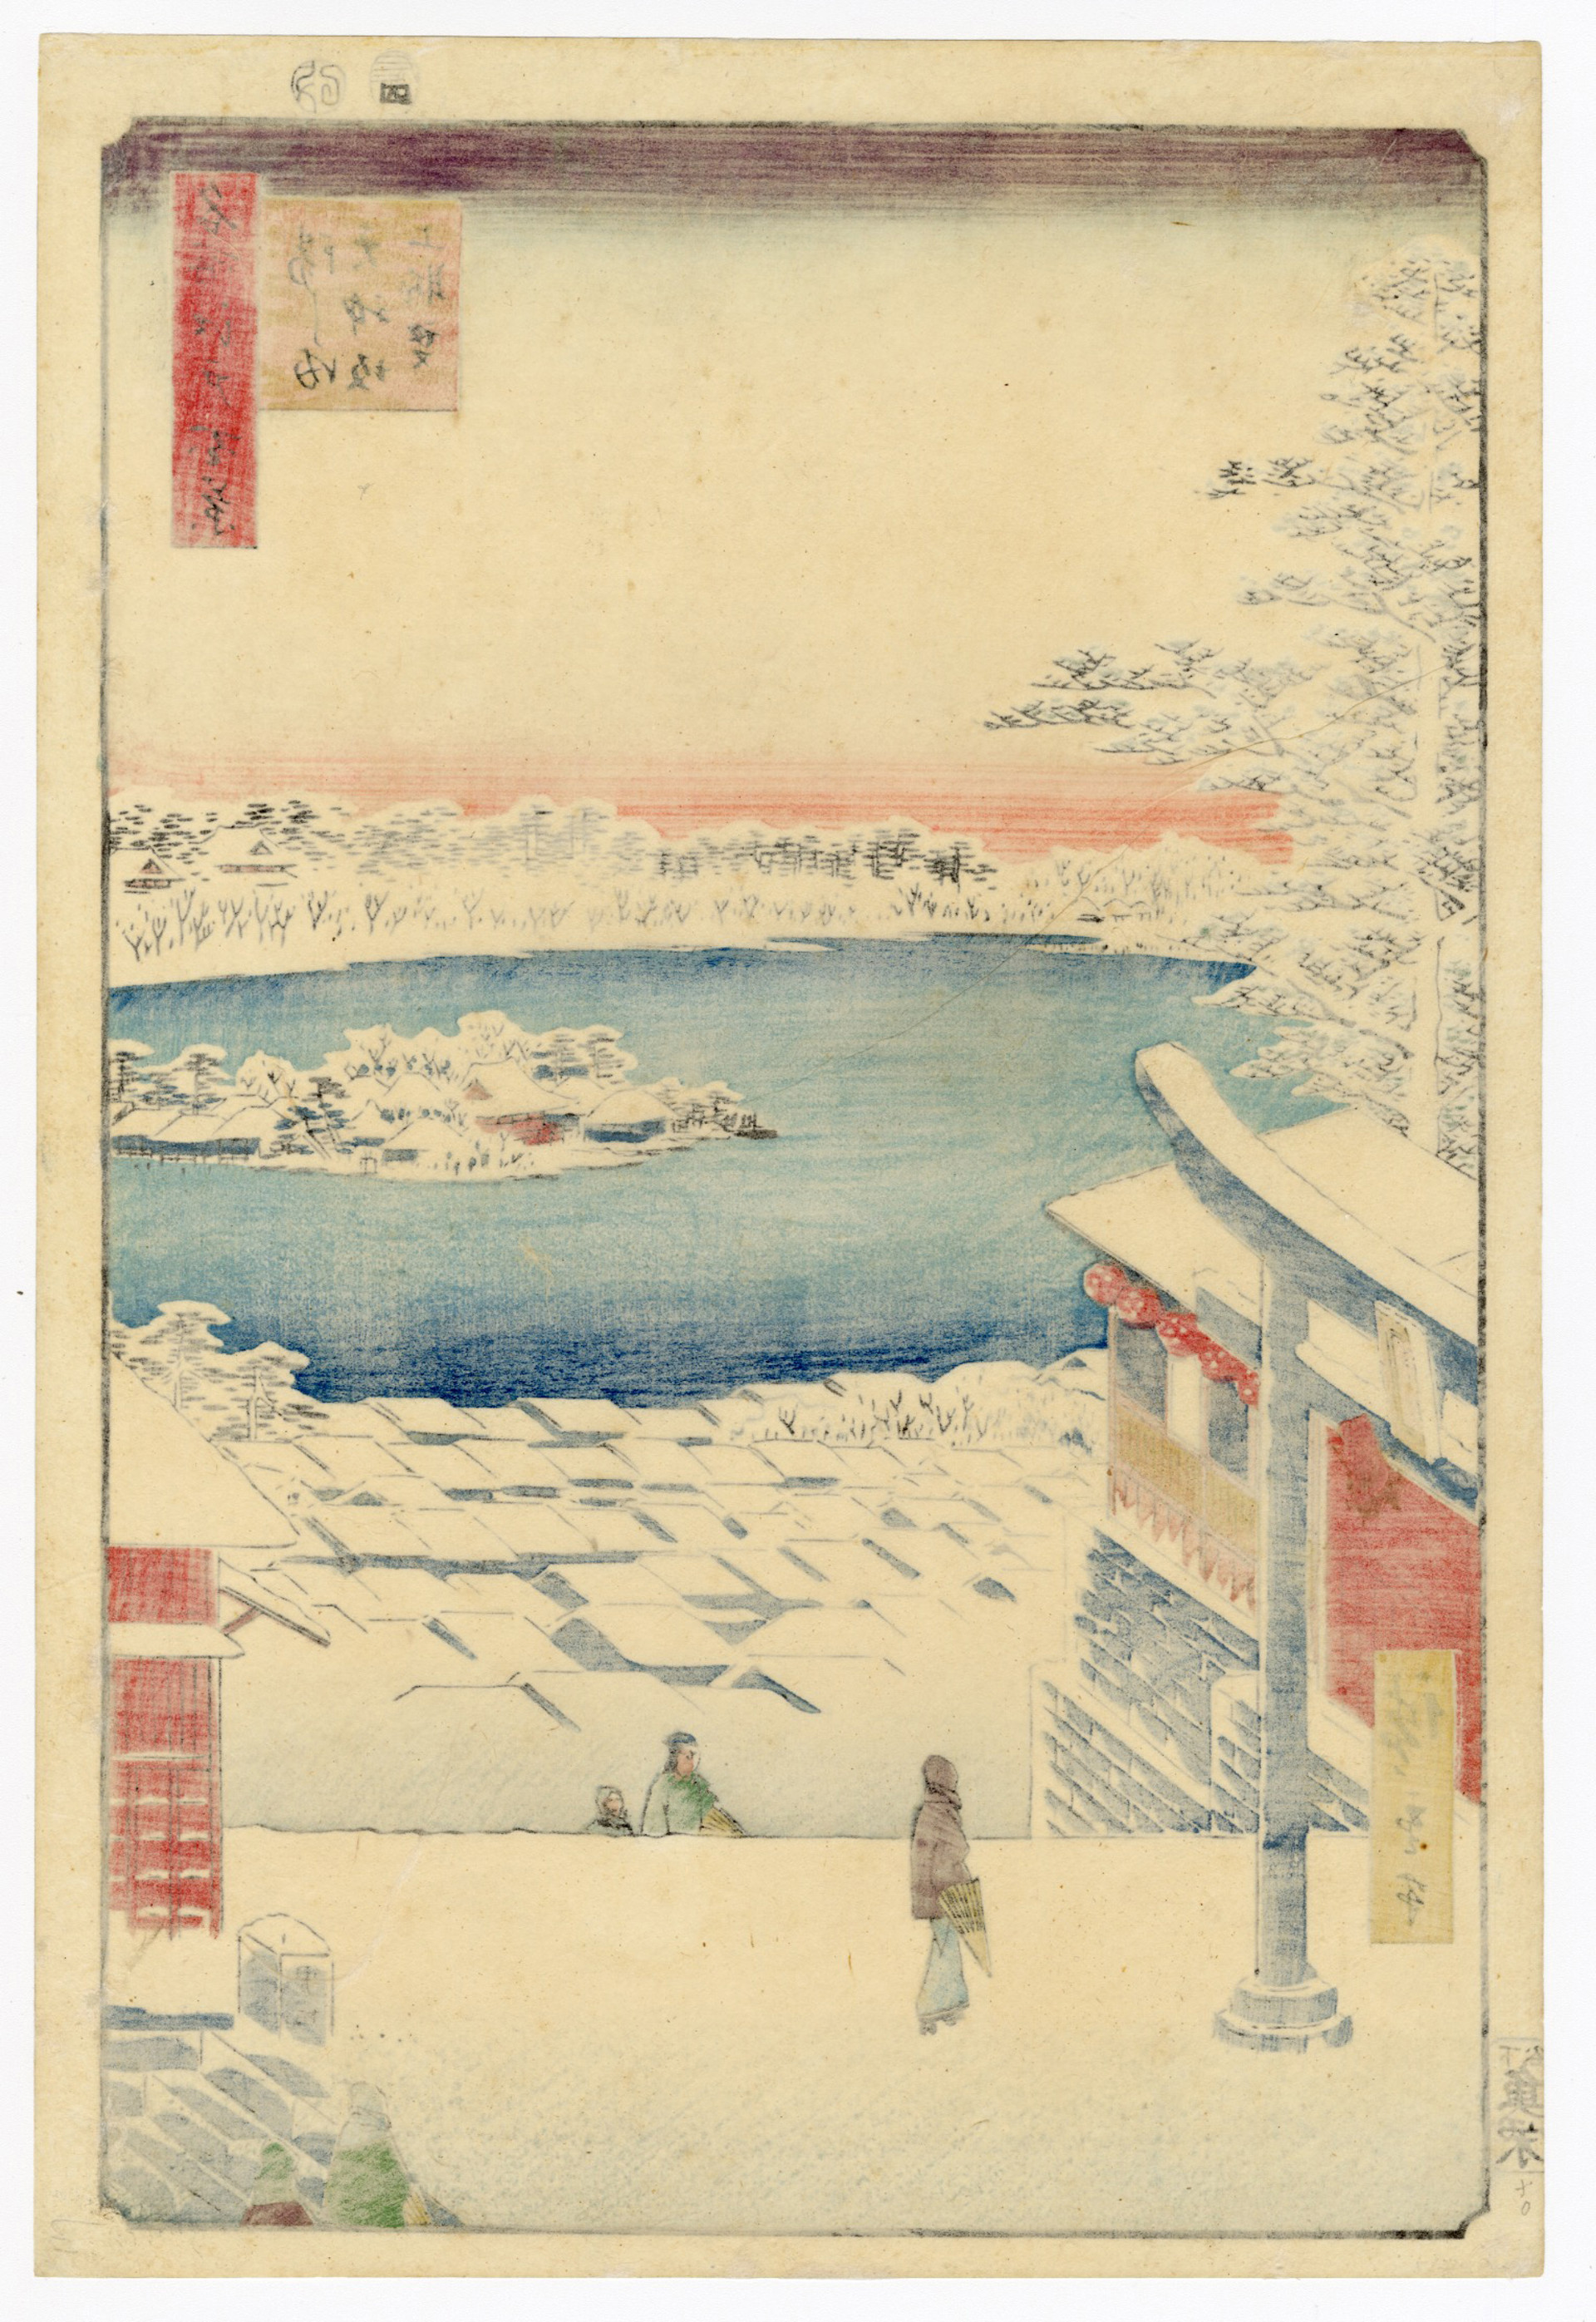 #117 Hilltop Views of the Yushima Tenjin Shrine by Hiroshige